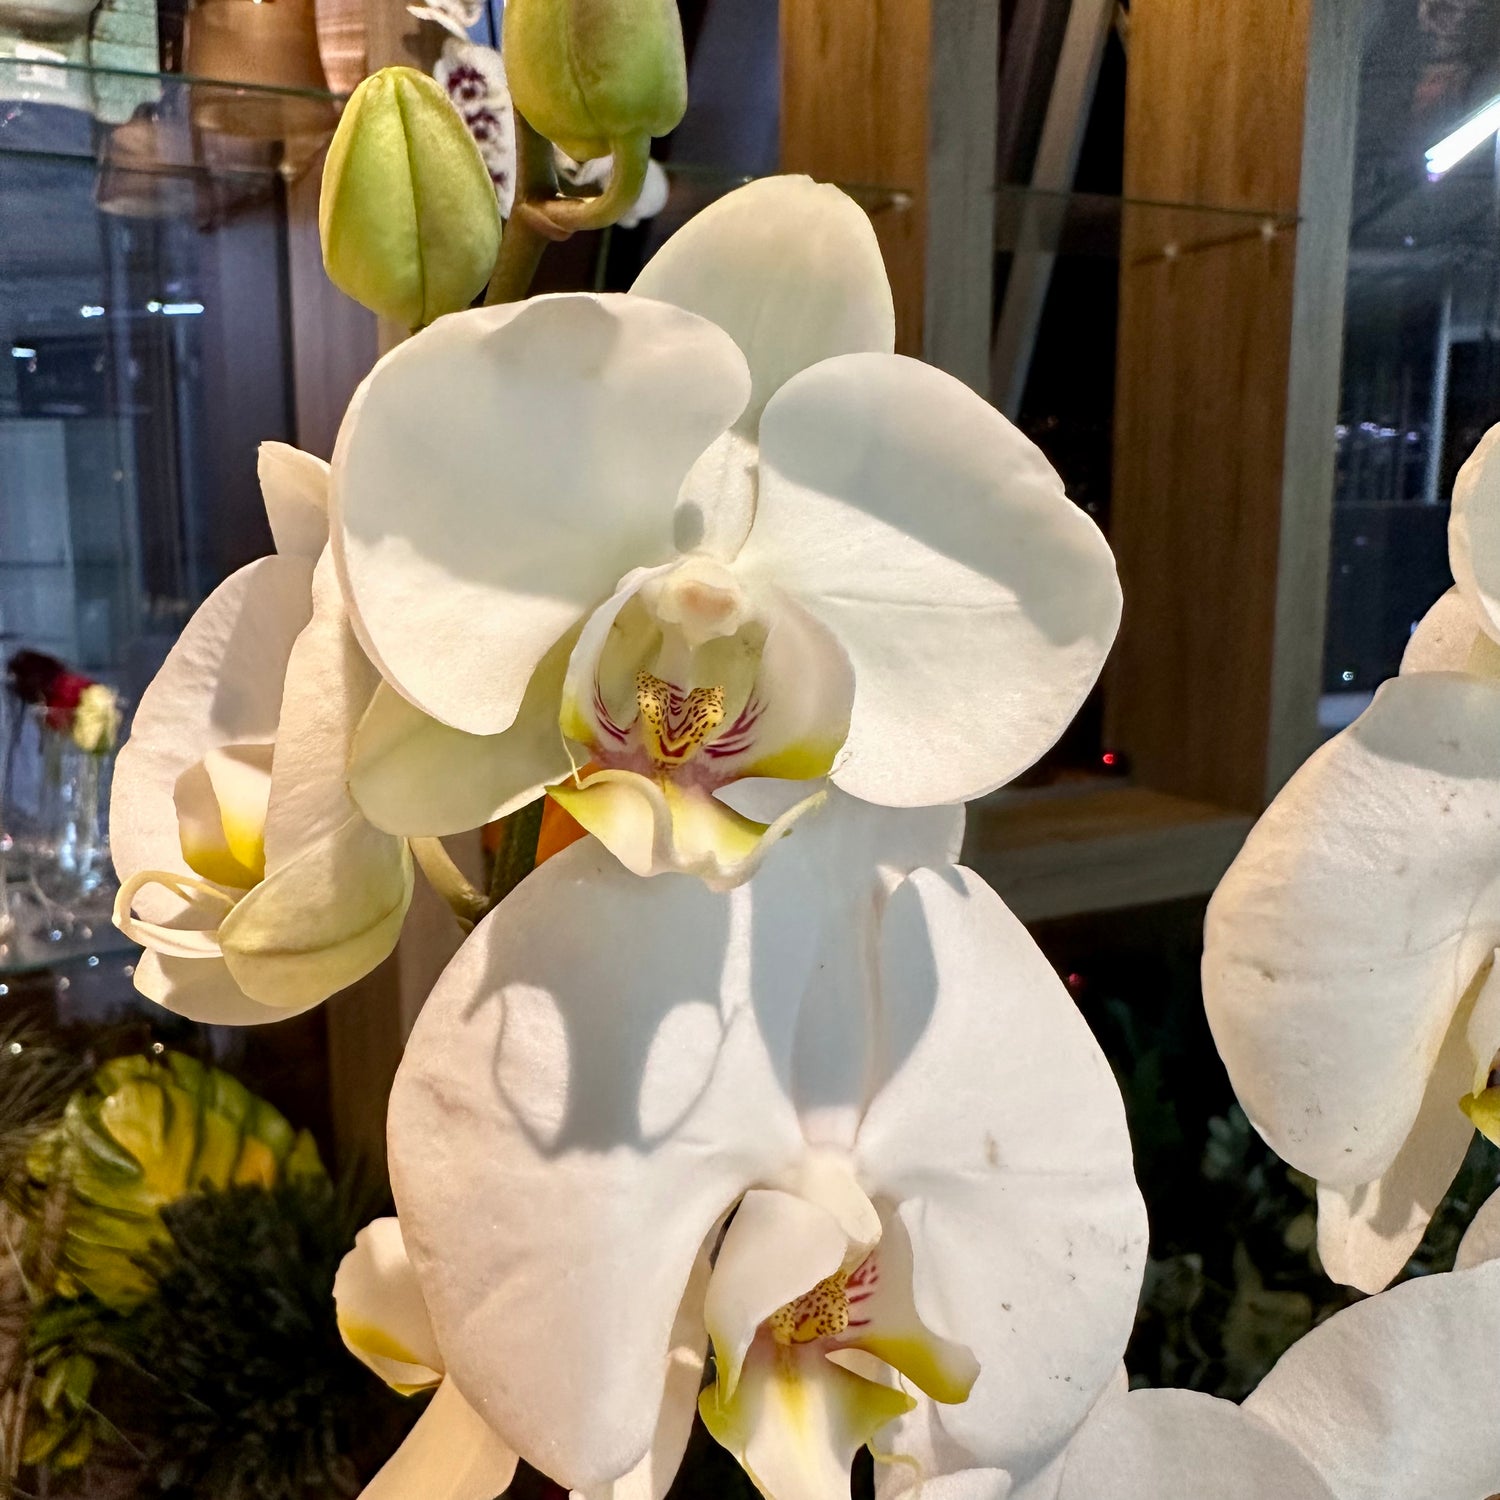 Beyaz Orkide Çift Dal